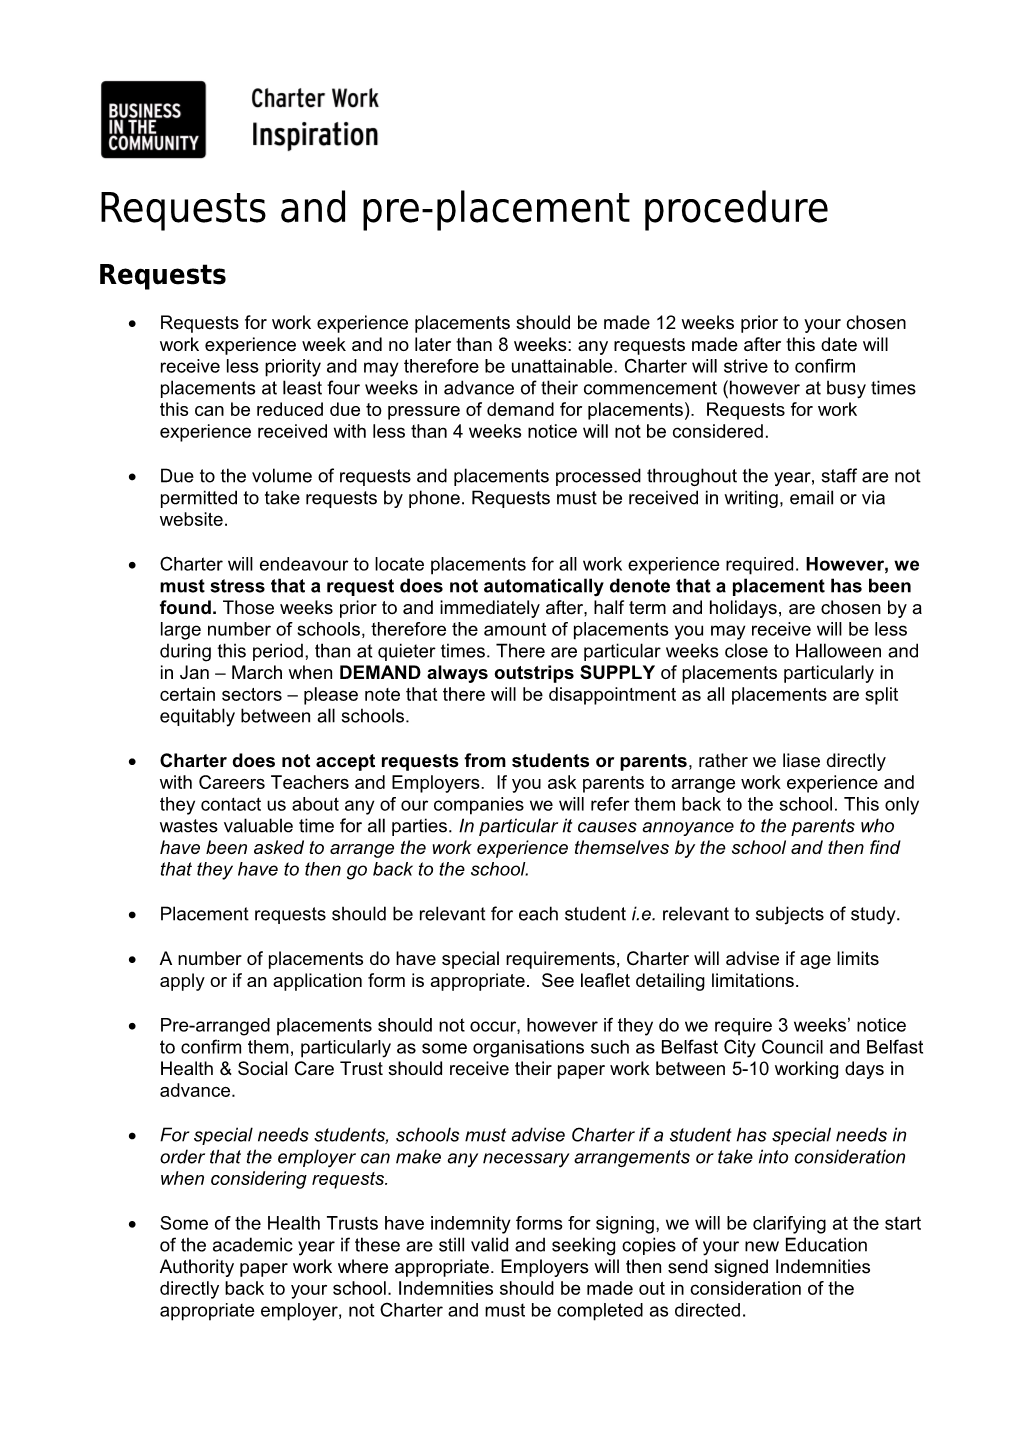 Requests & Pre-Placement Procedure